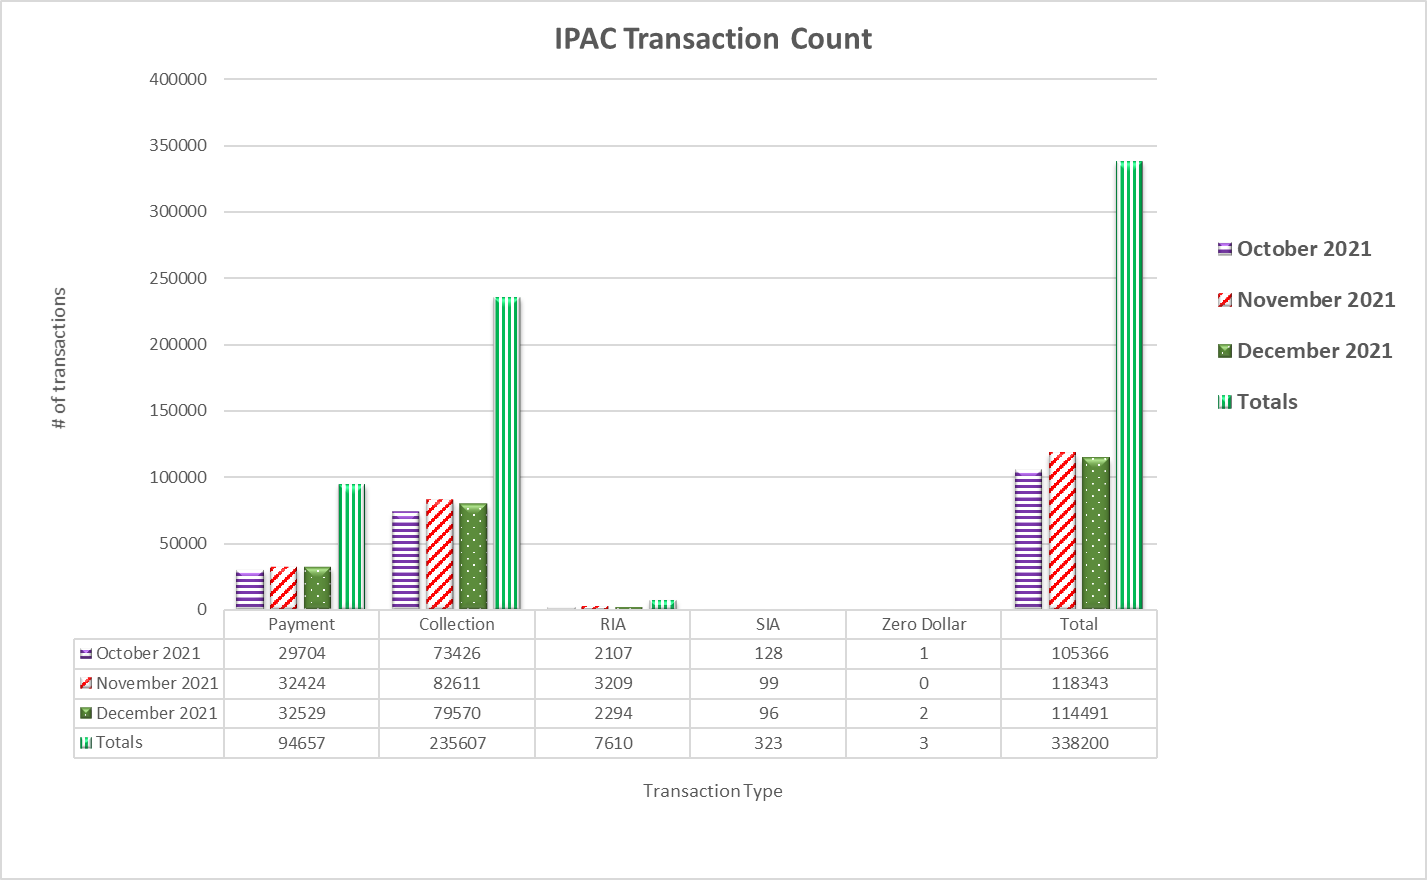 IPAC Transaction Count October 2021 through December 2021